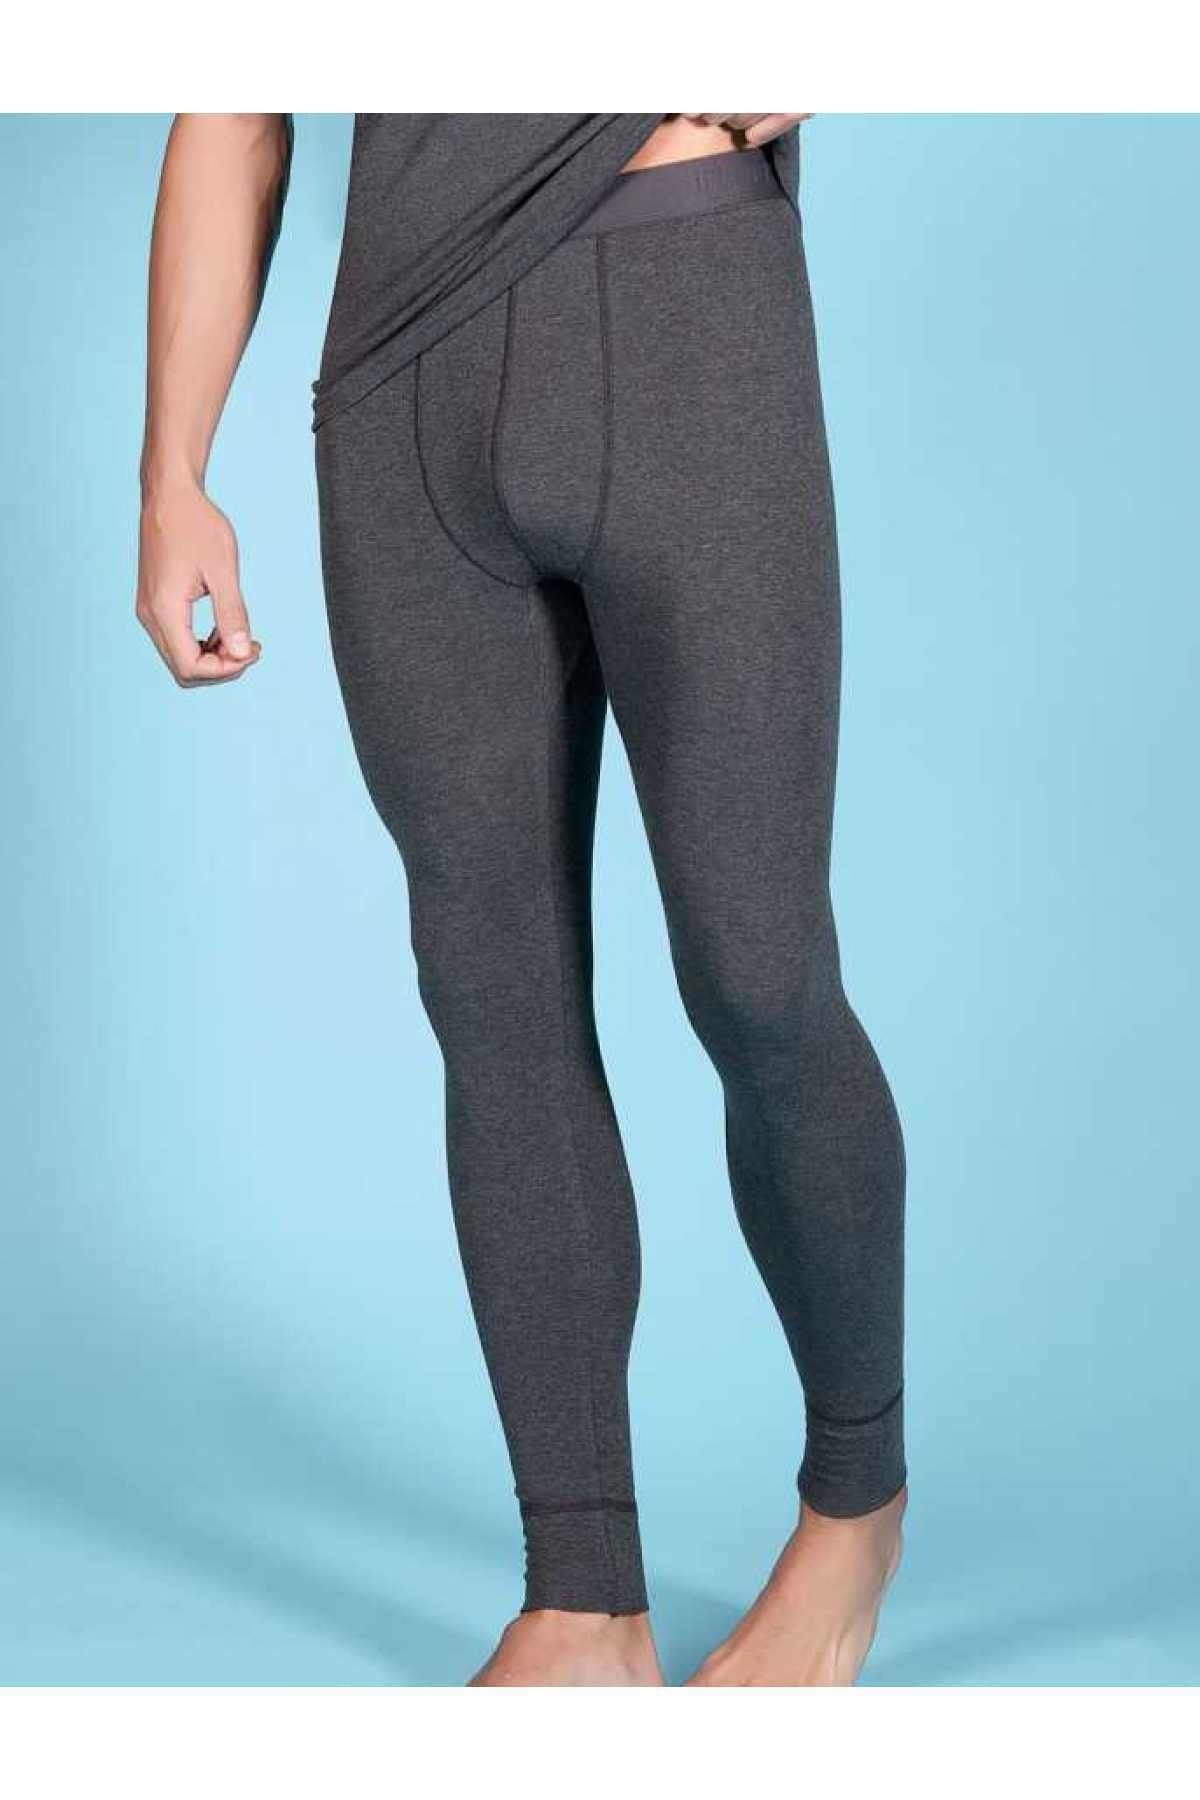 Thermal Pants for Men  Buy Long Pants for Men from Jockey